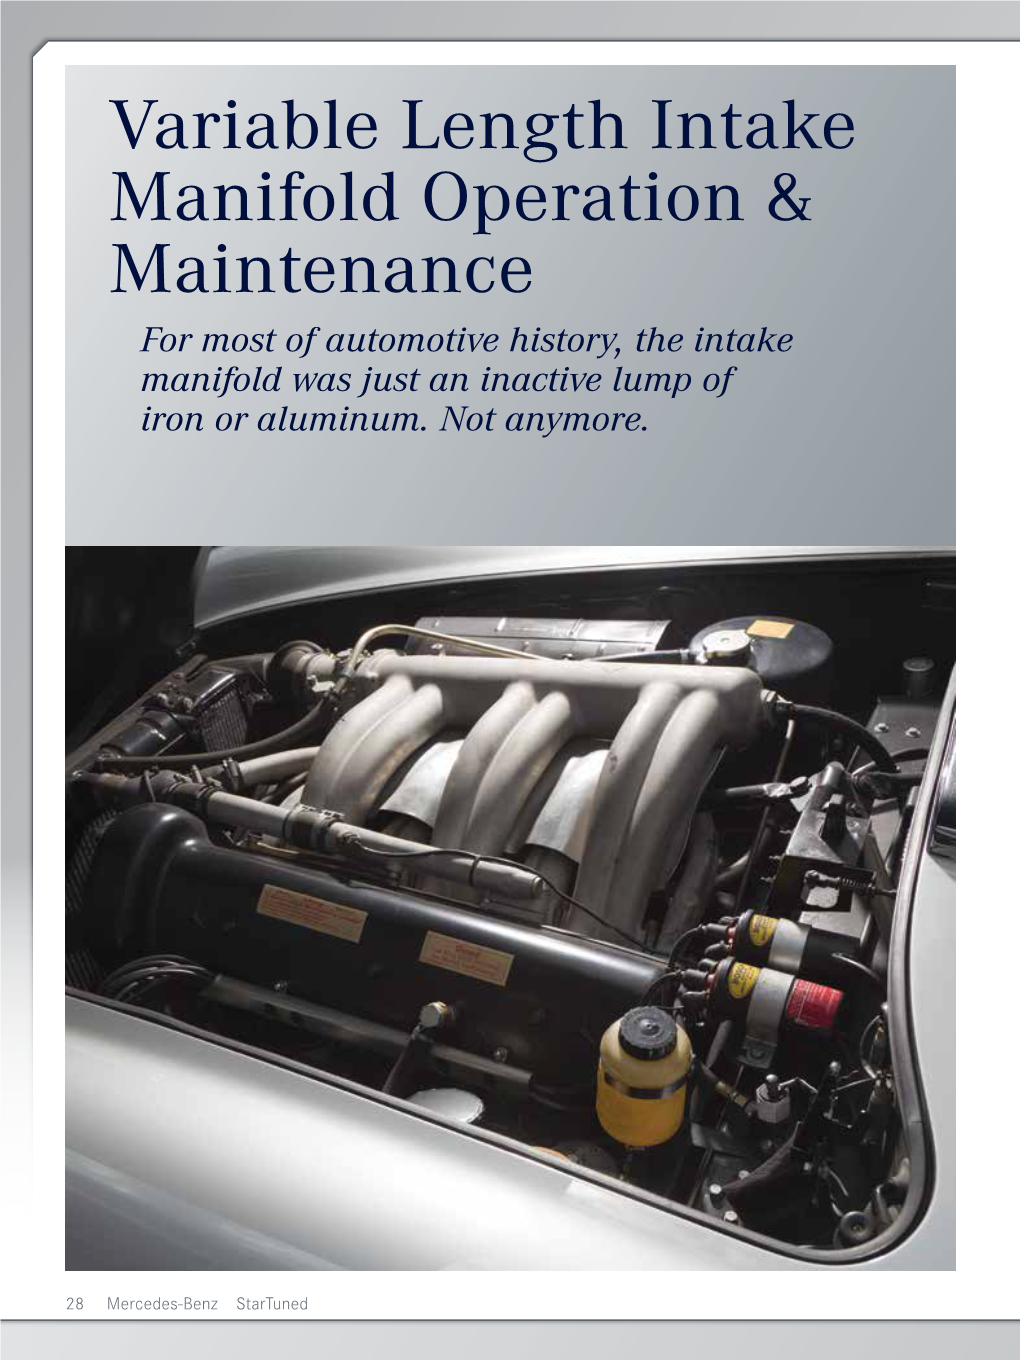 Variable Length Intake Manifold Operation & Maintenance